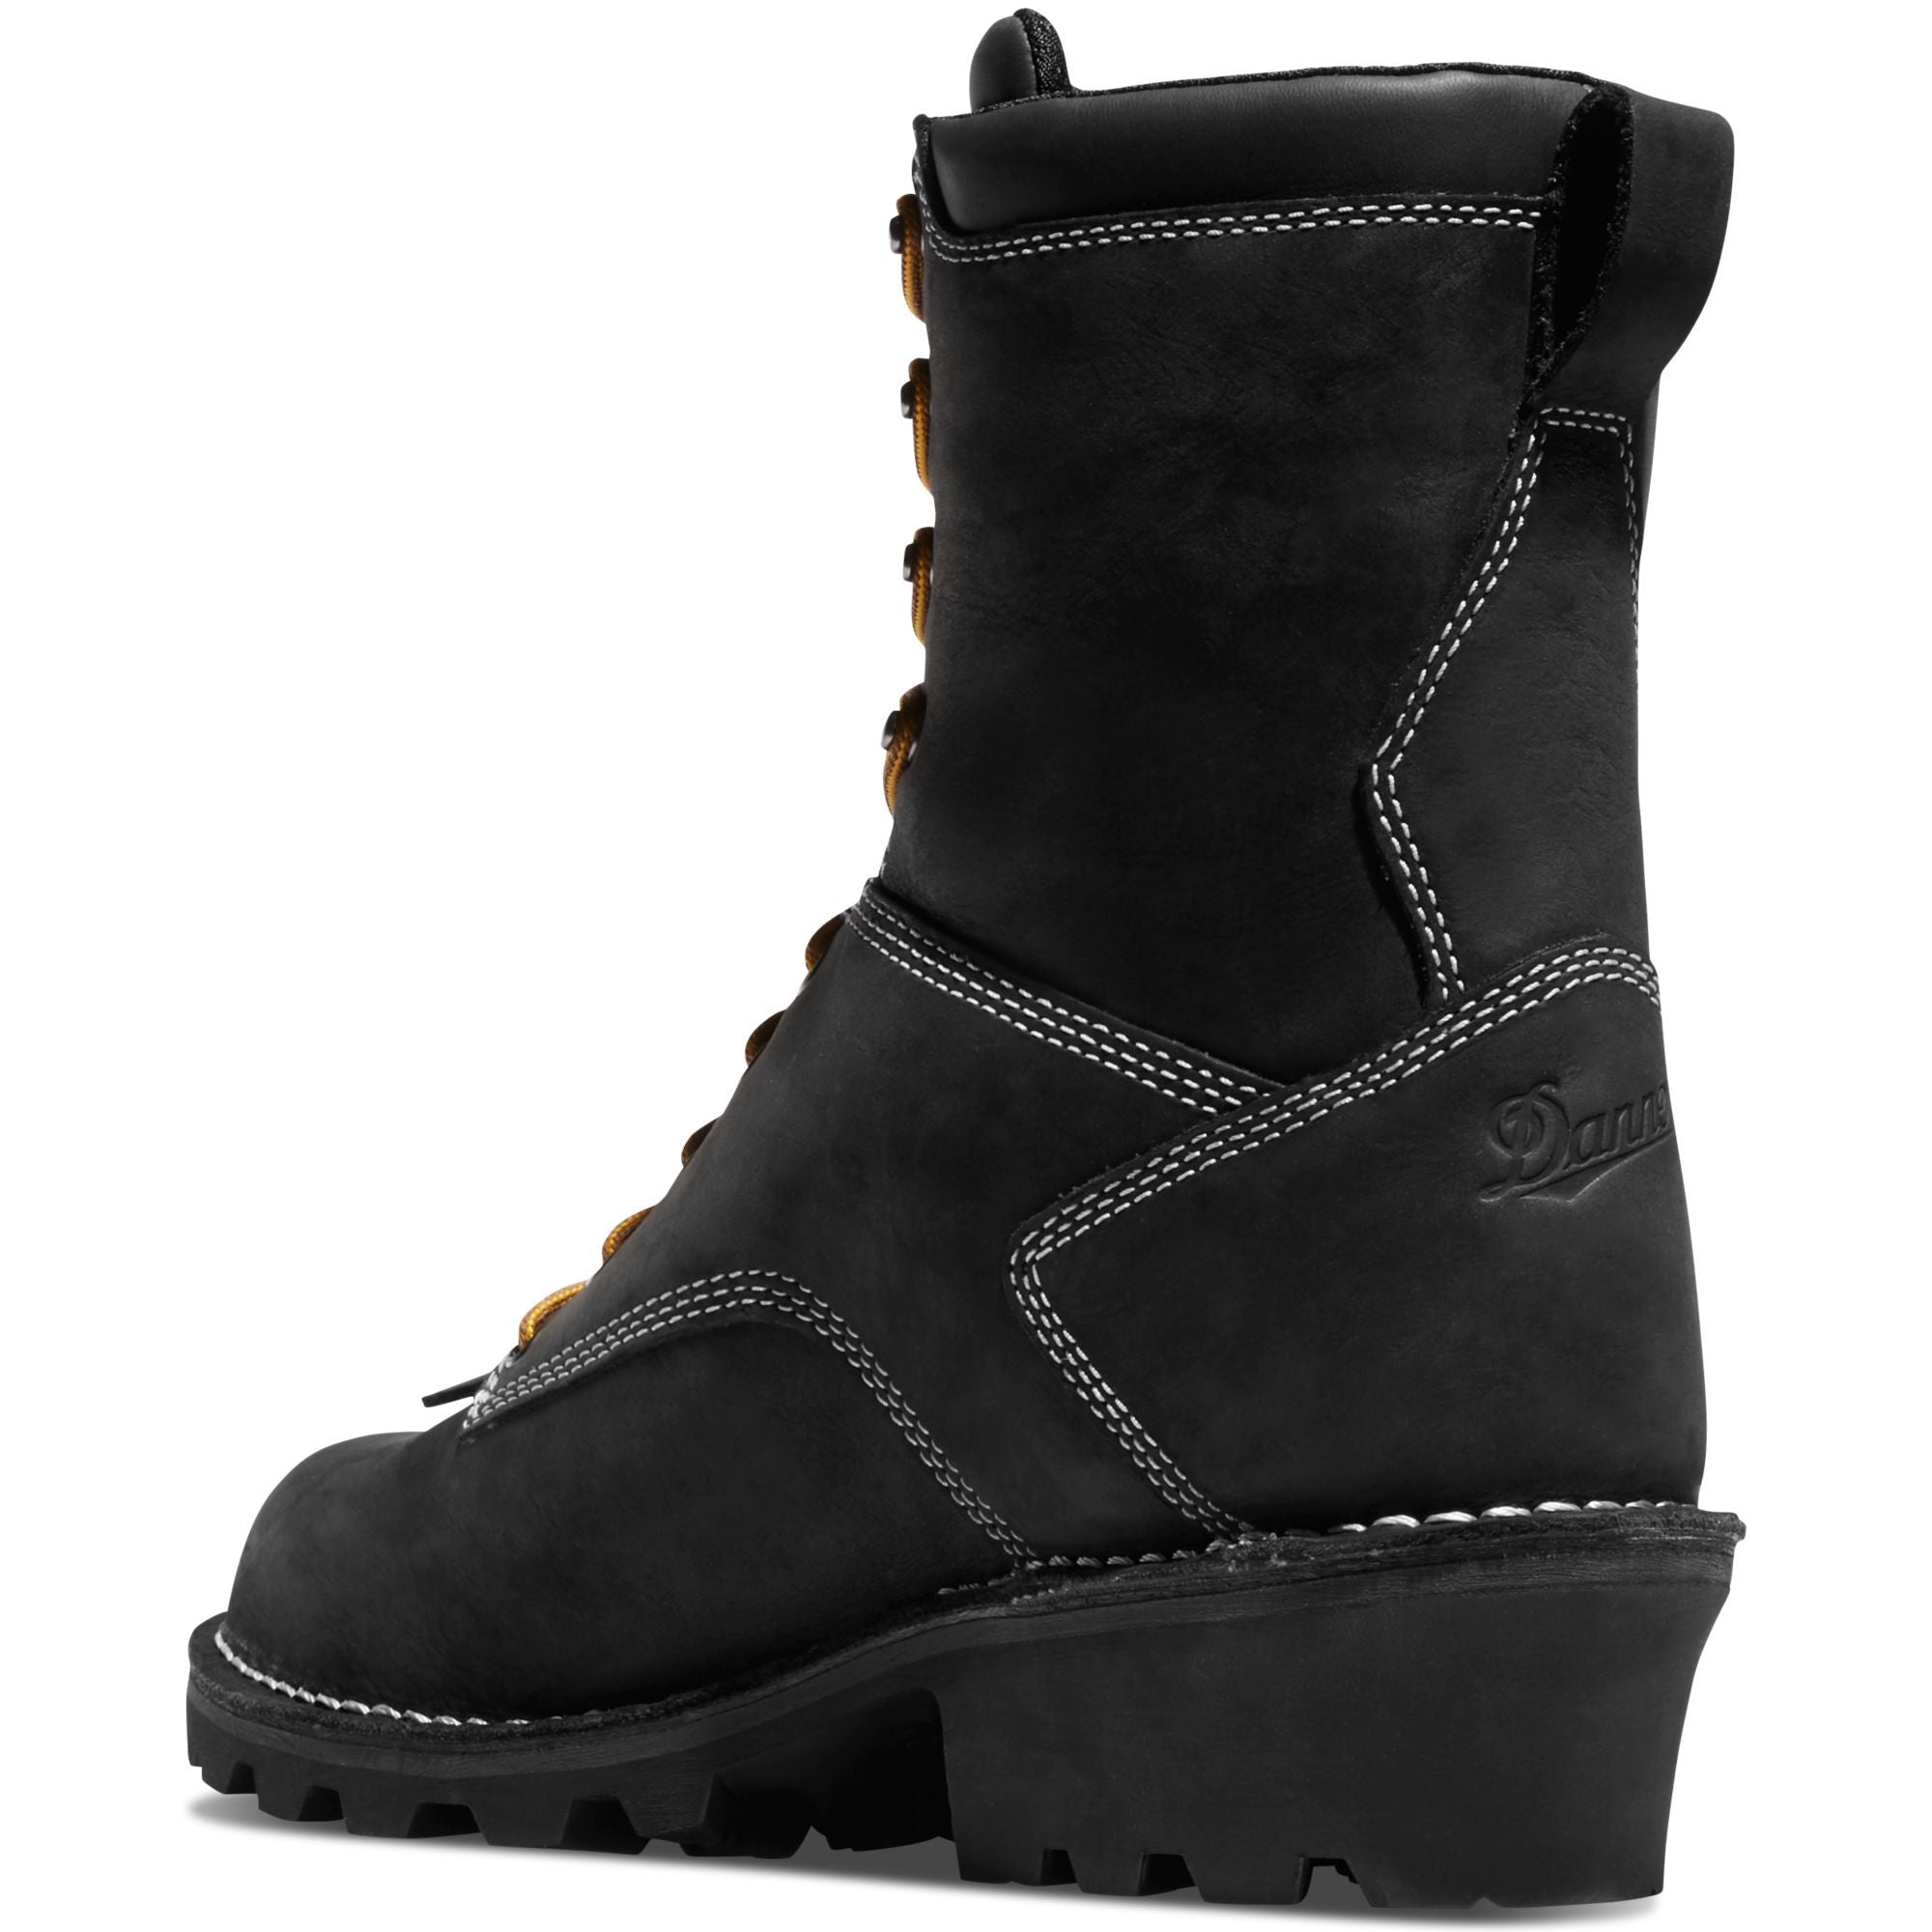 Danner Men's Logger Soft Toe WP Work Boot - Black - 15431  - Overlook Boots